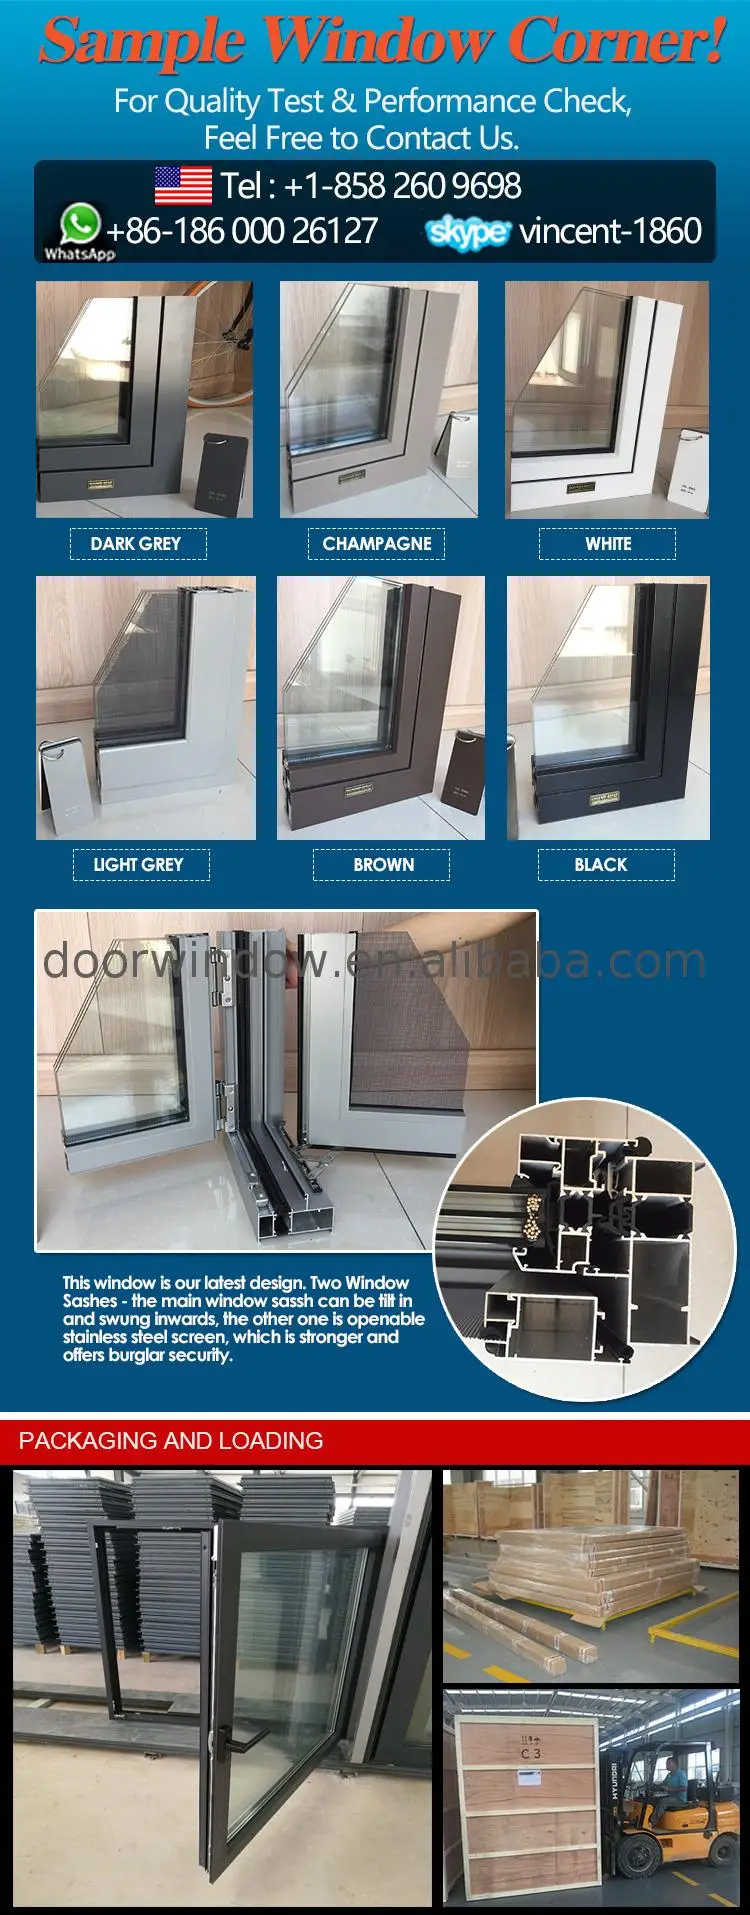 Apartment aluminium tilt&turn window aluminum tilt turn windows with double glass as certificate